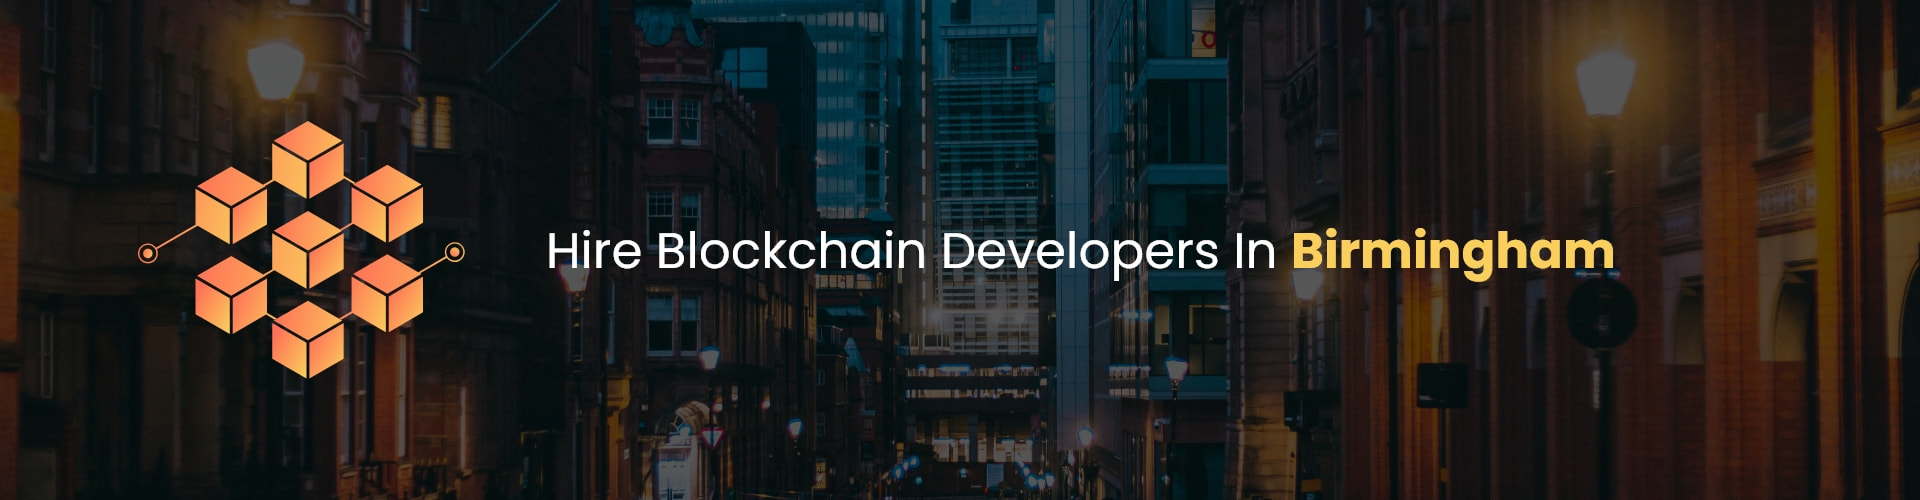 hire blockchain developers in birmingham